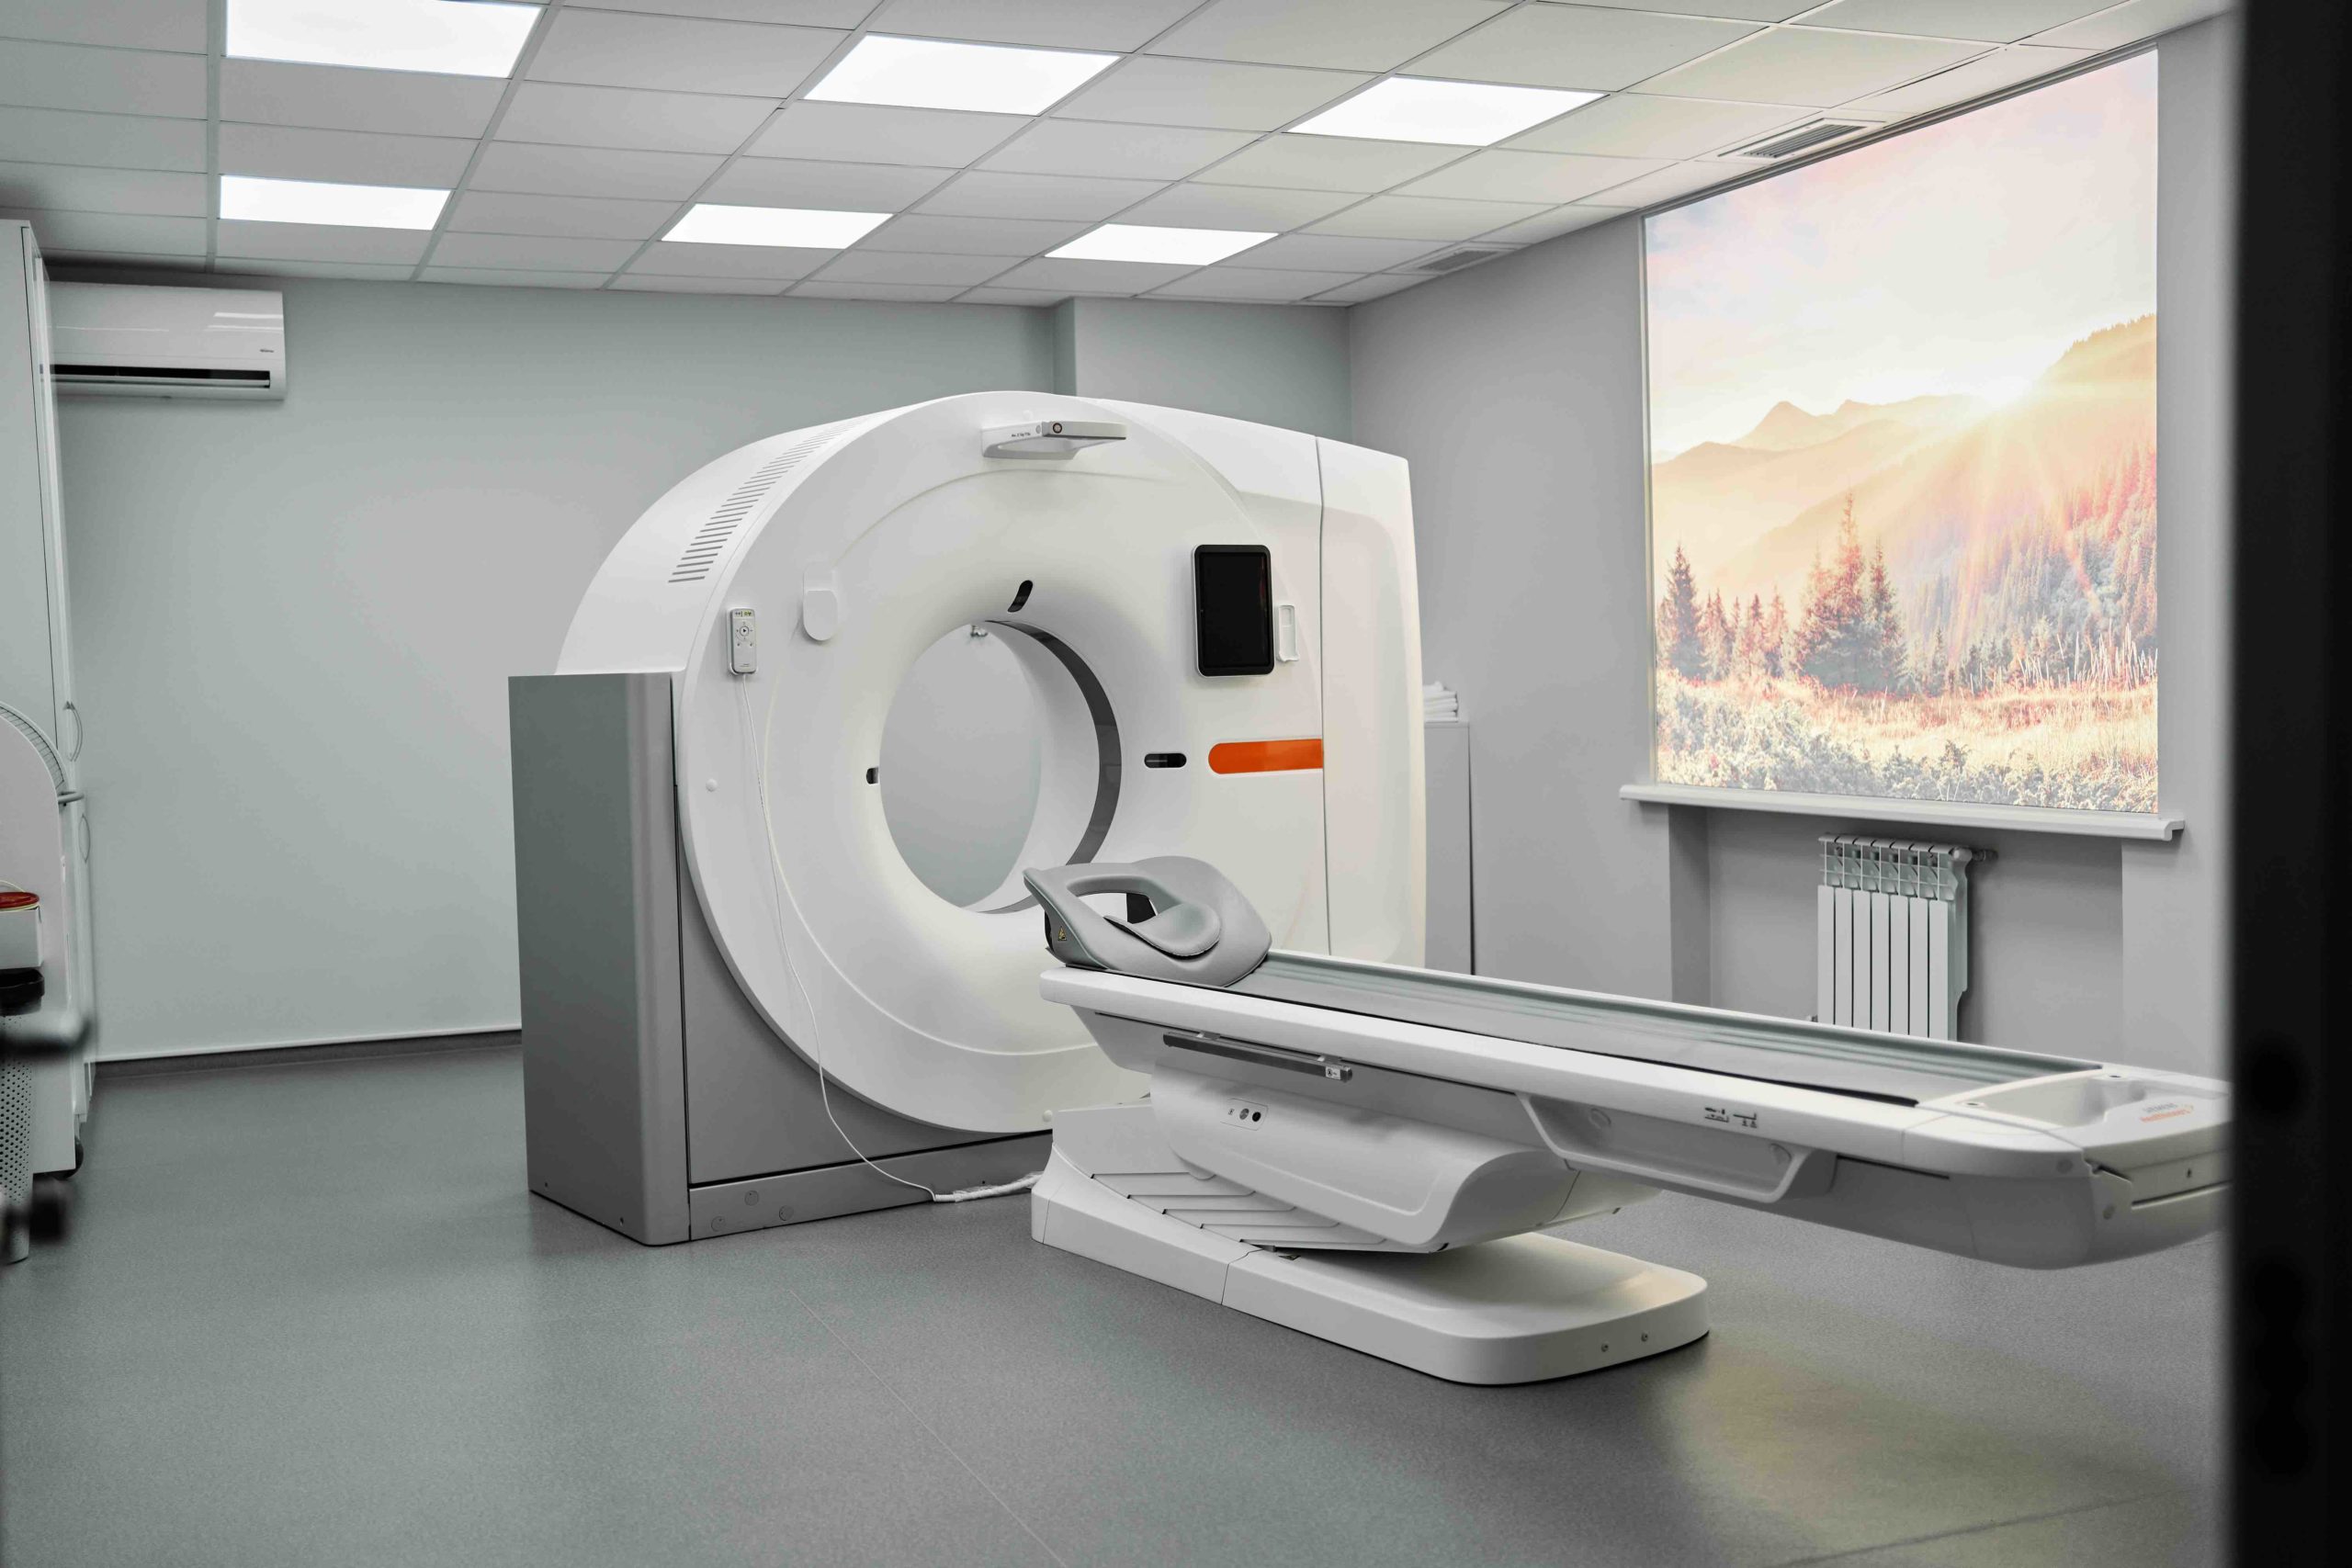 Brain MRI: What It Is, Purpose, Procedure & Results